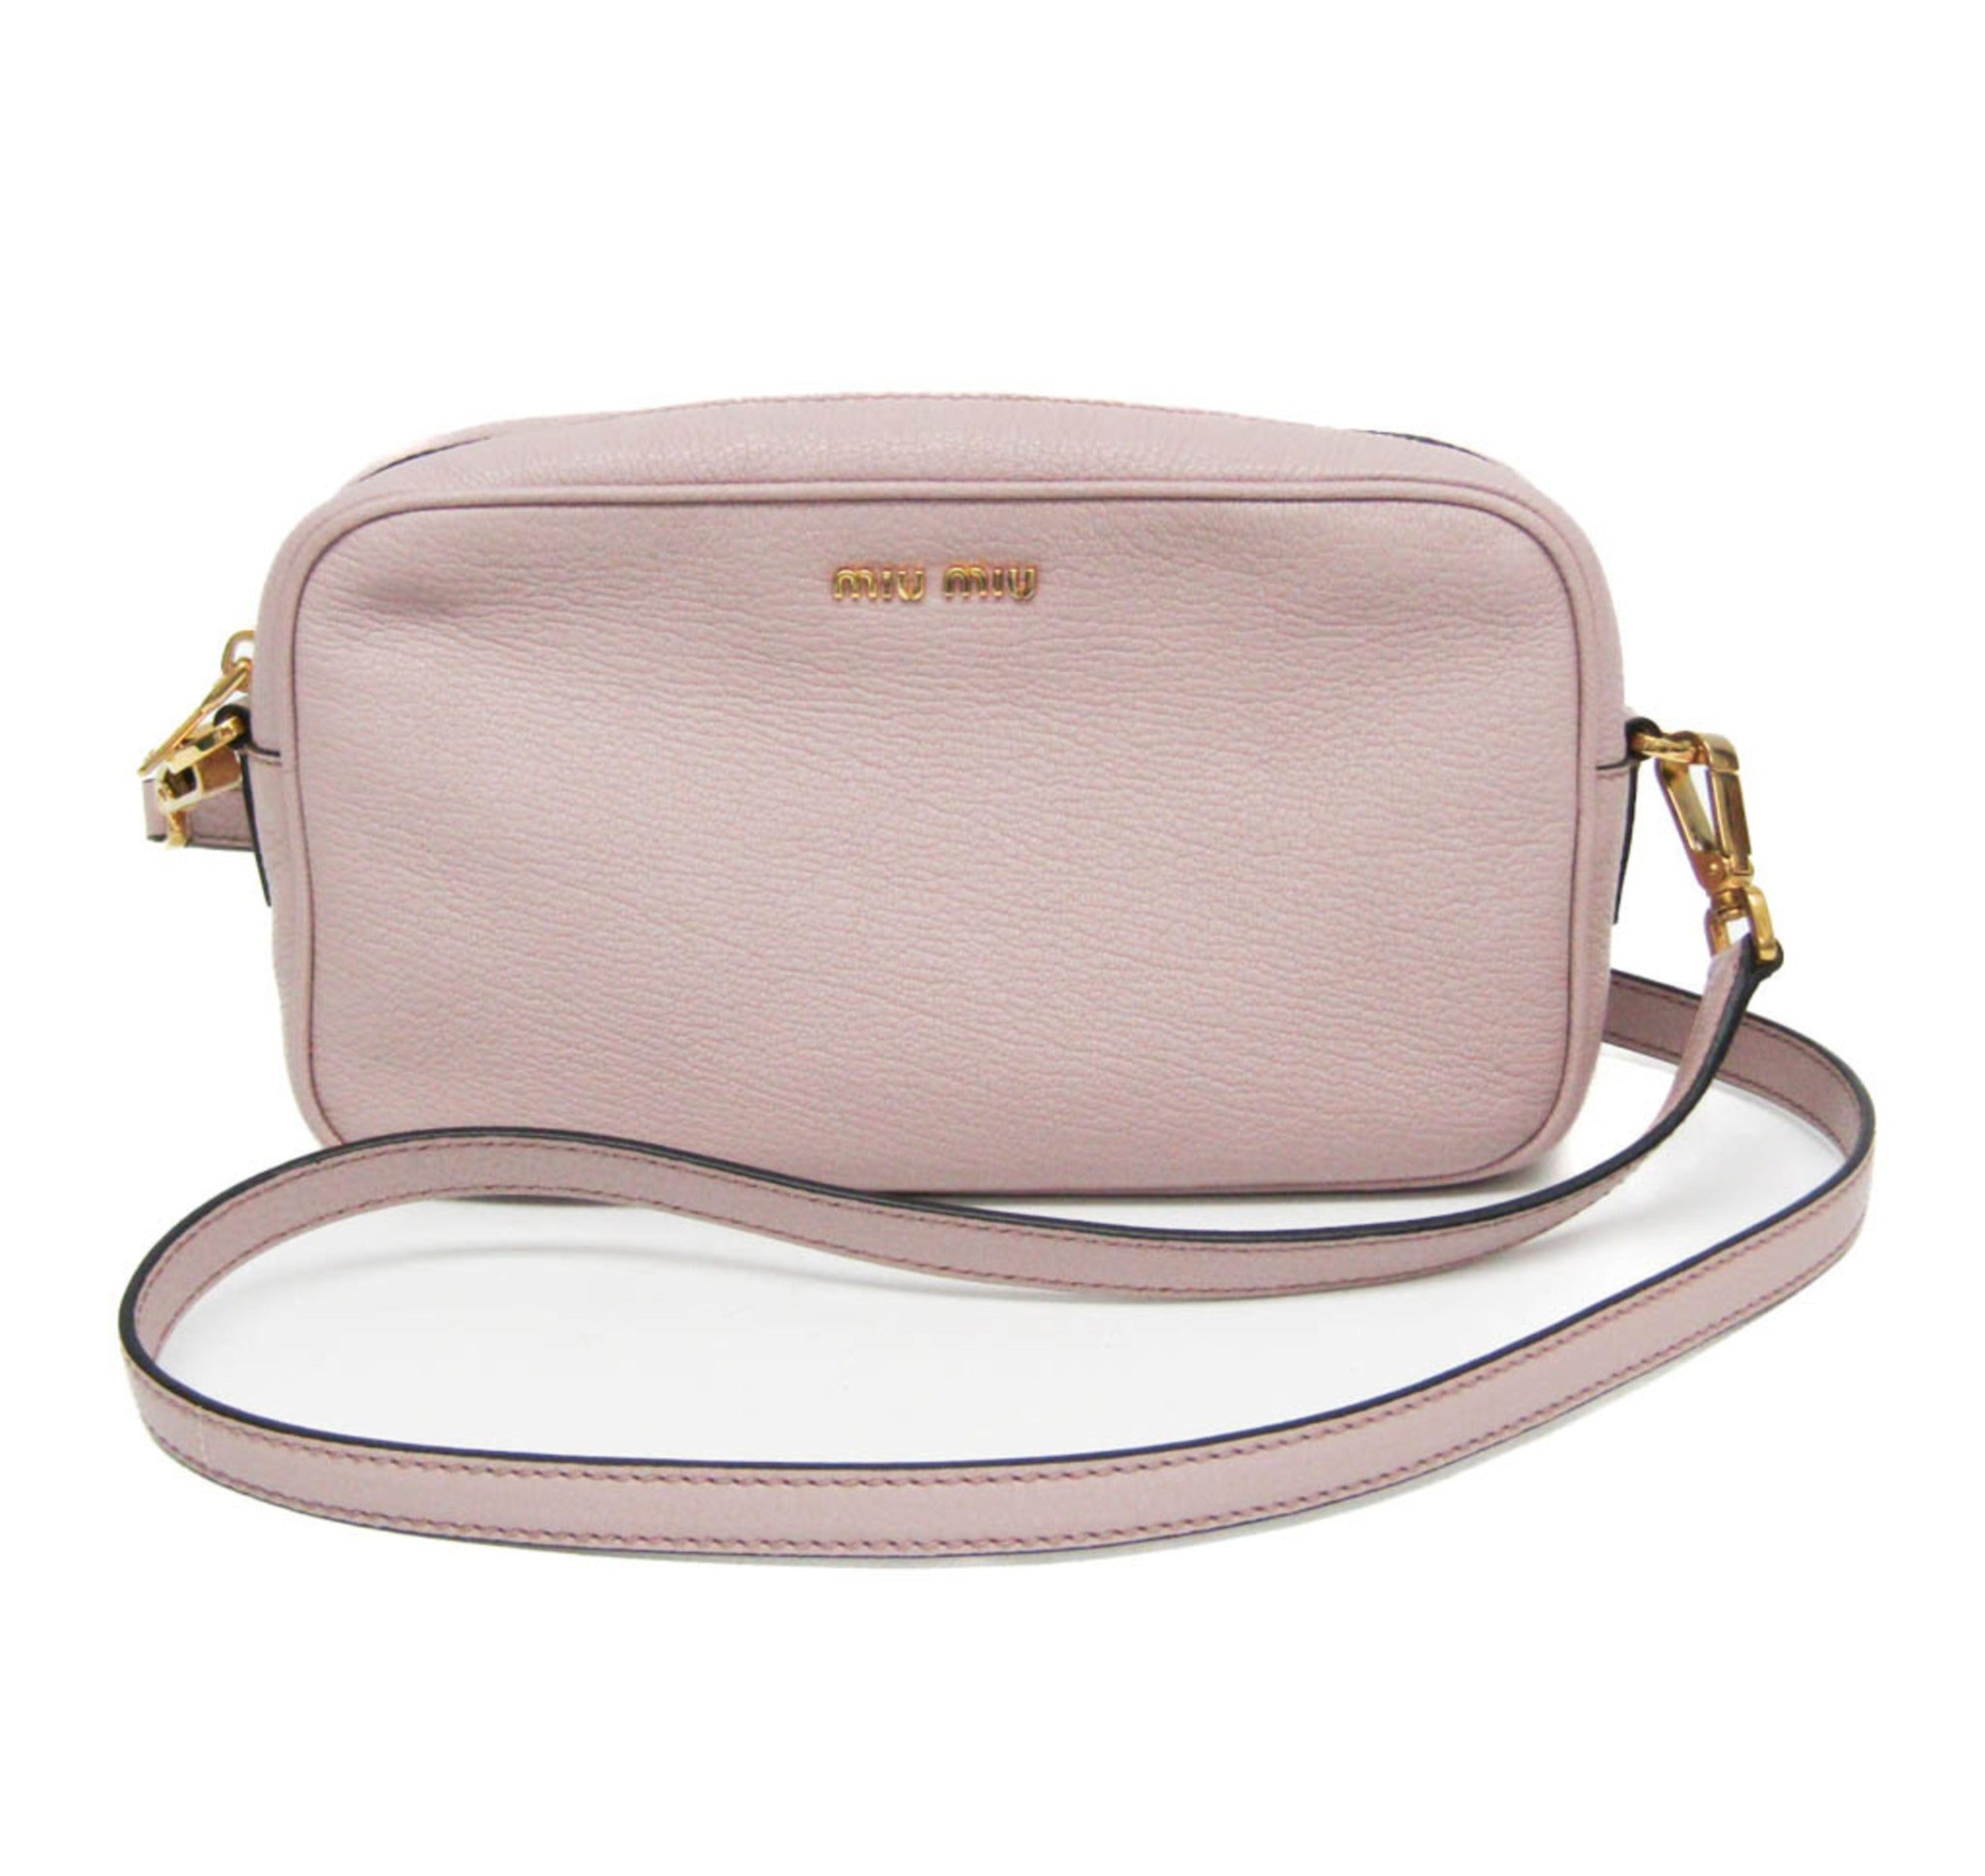 Miu Miu MADRAS 5BH056 Women's Leather Shoulder Bag Dusty Pink-0